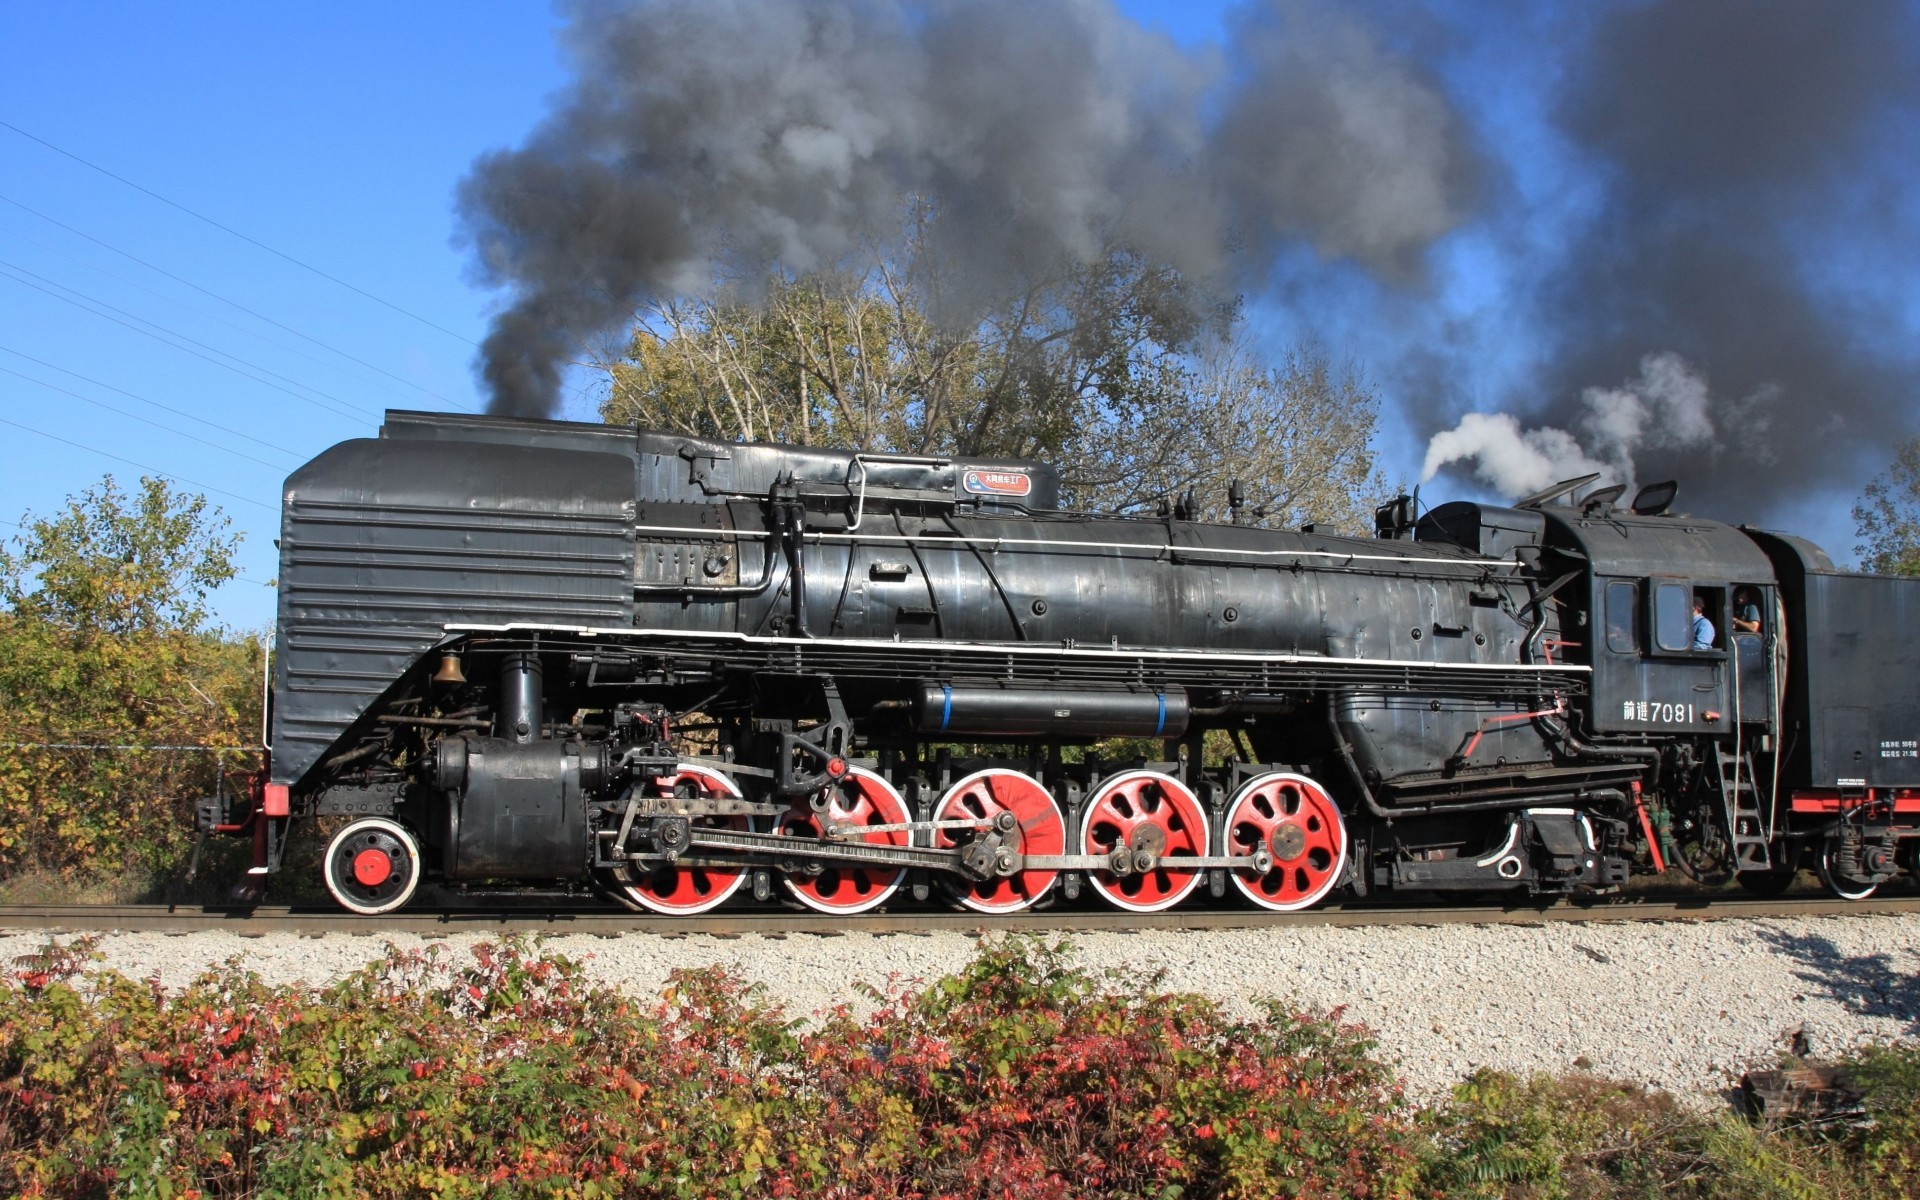 General 1920x1200 steam locomotive locomotive train outdoors railway vehicle smoke numbers